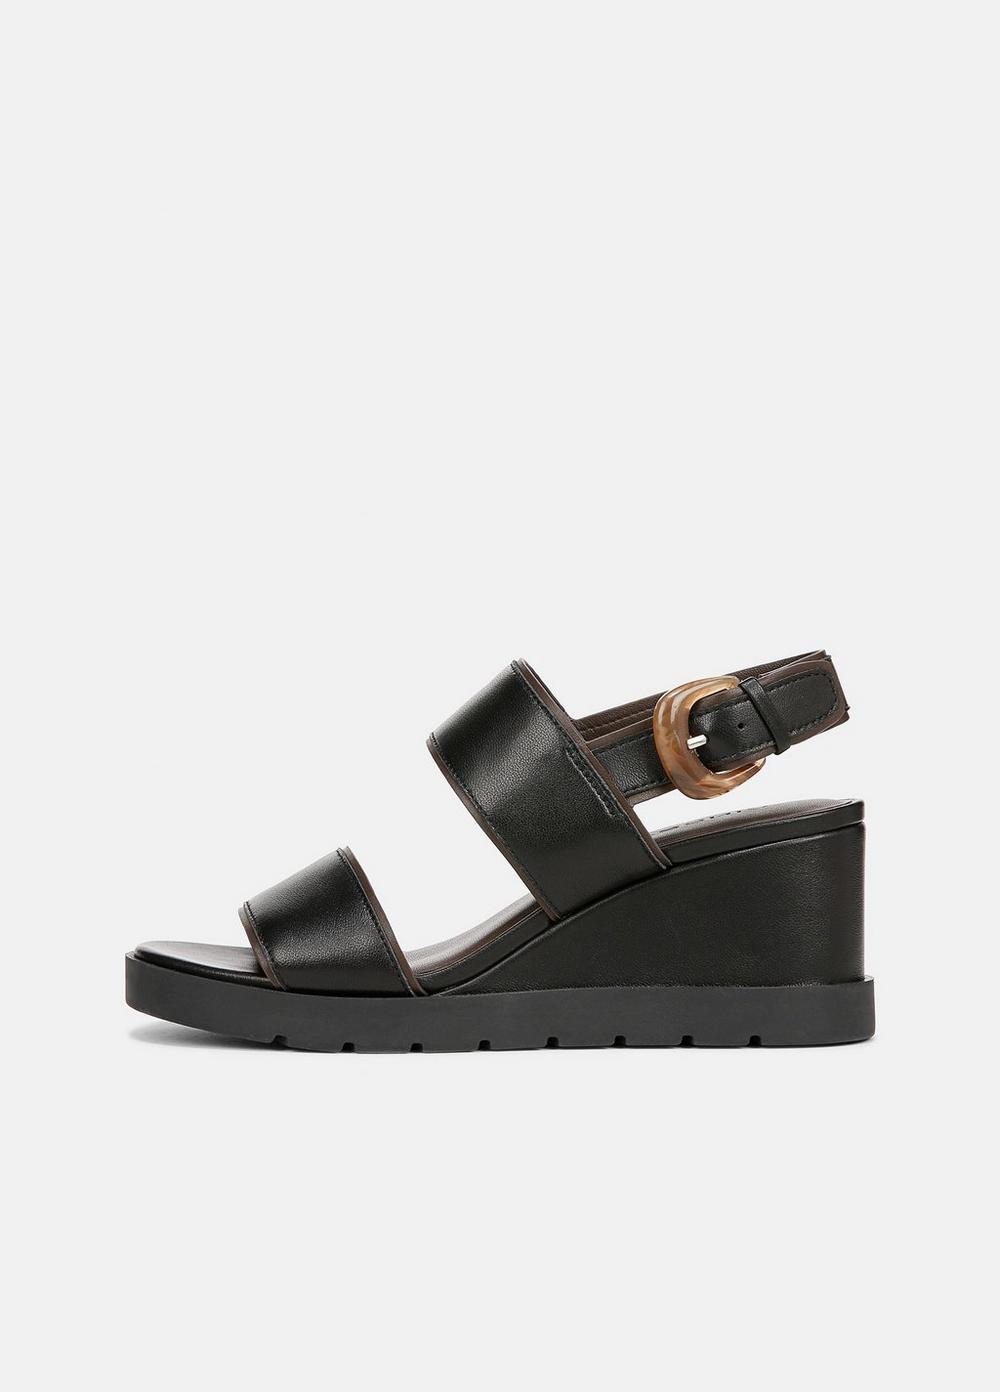 Roma Leather Wedge Sandal, Black, Size 9.5 Vince